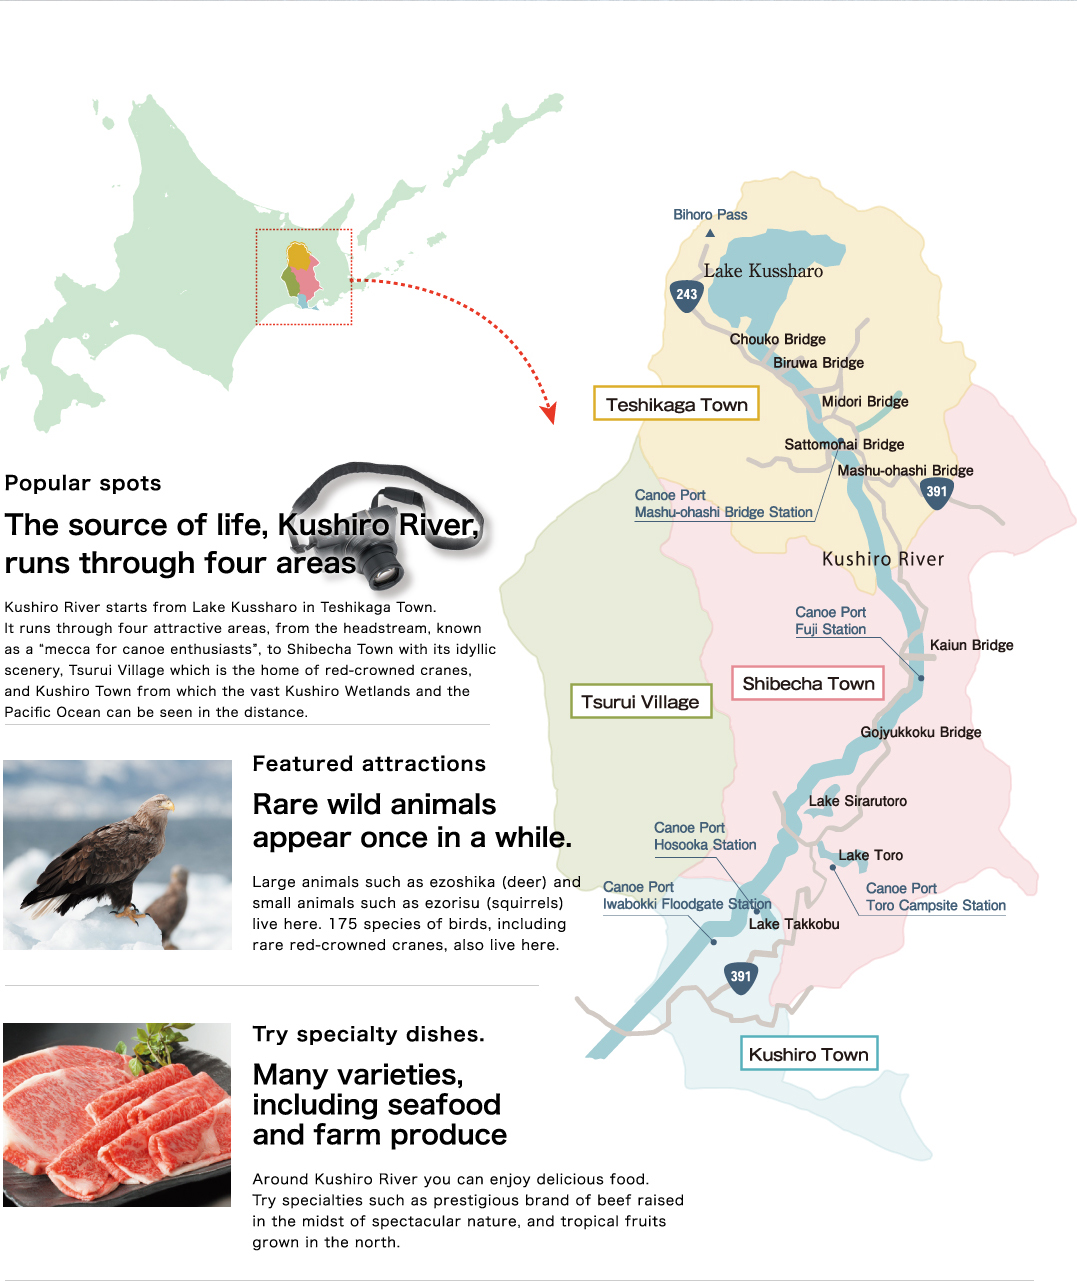 The source of life, Kushiro River, runs through four areas